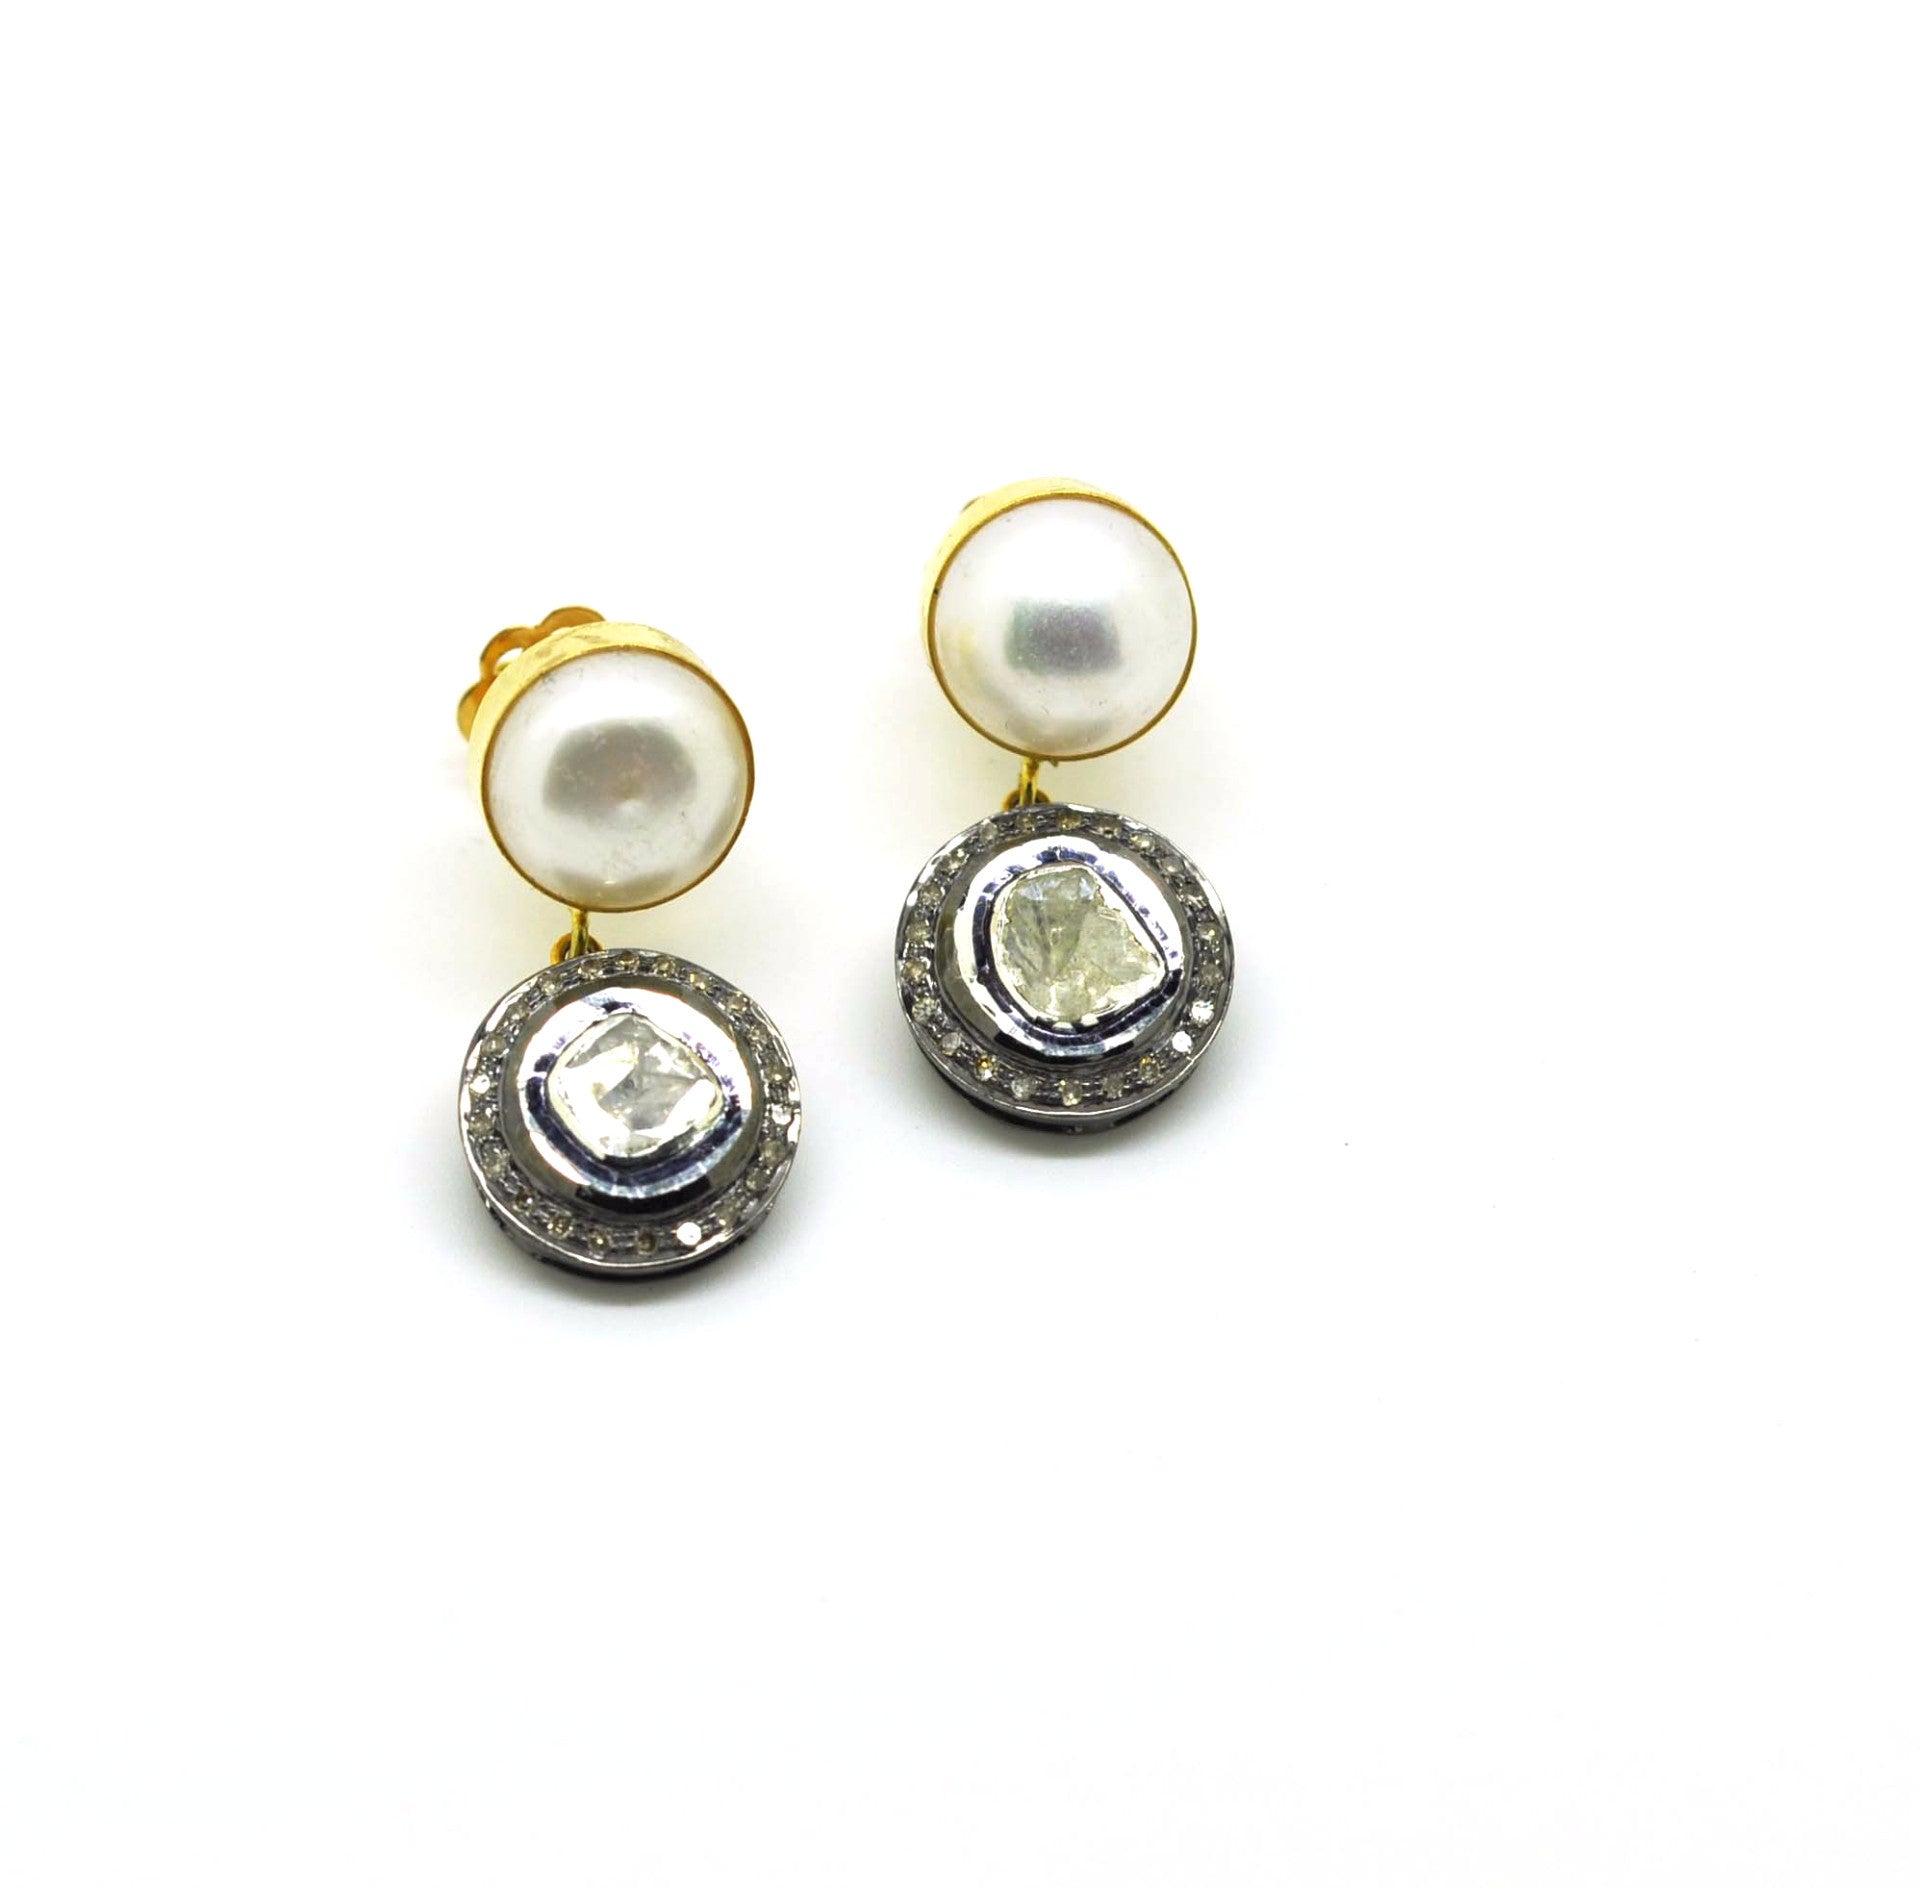 SOLD Polki and Pearl earrings